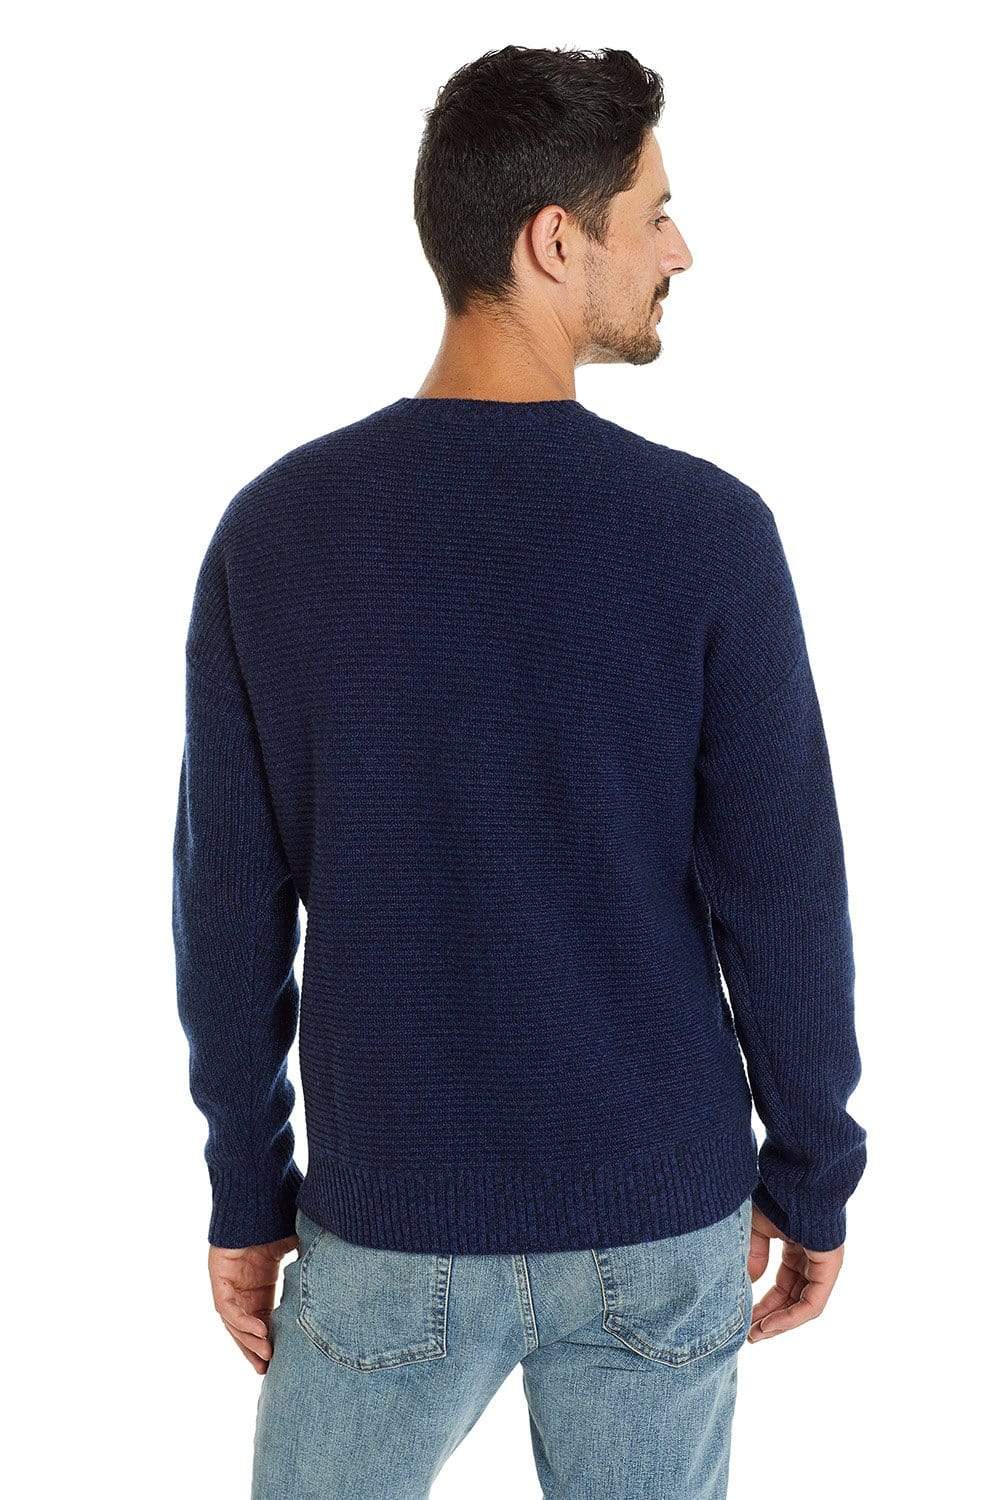 Gabriel Chunky Men's Cashmere Sweater